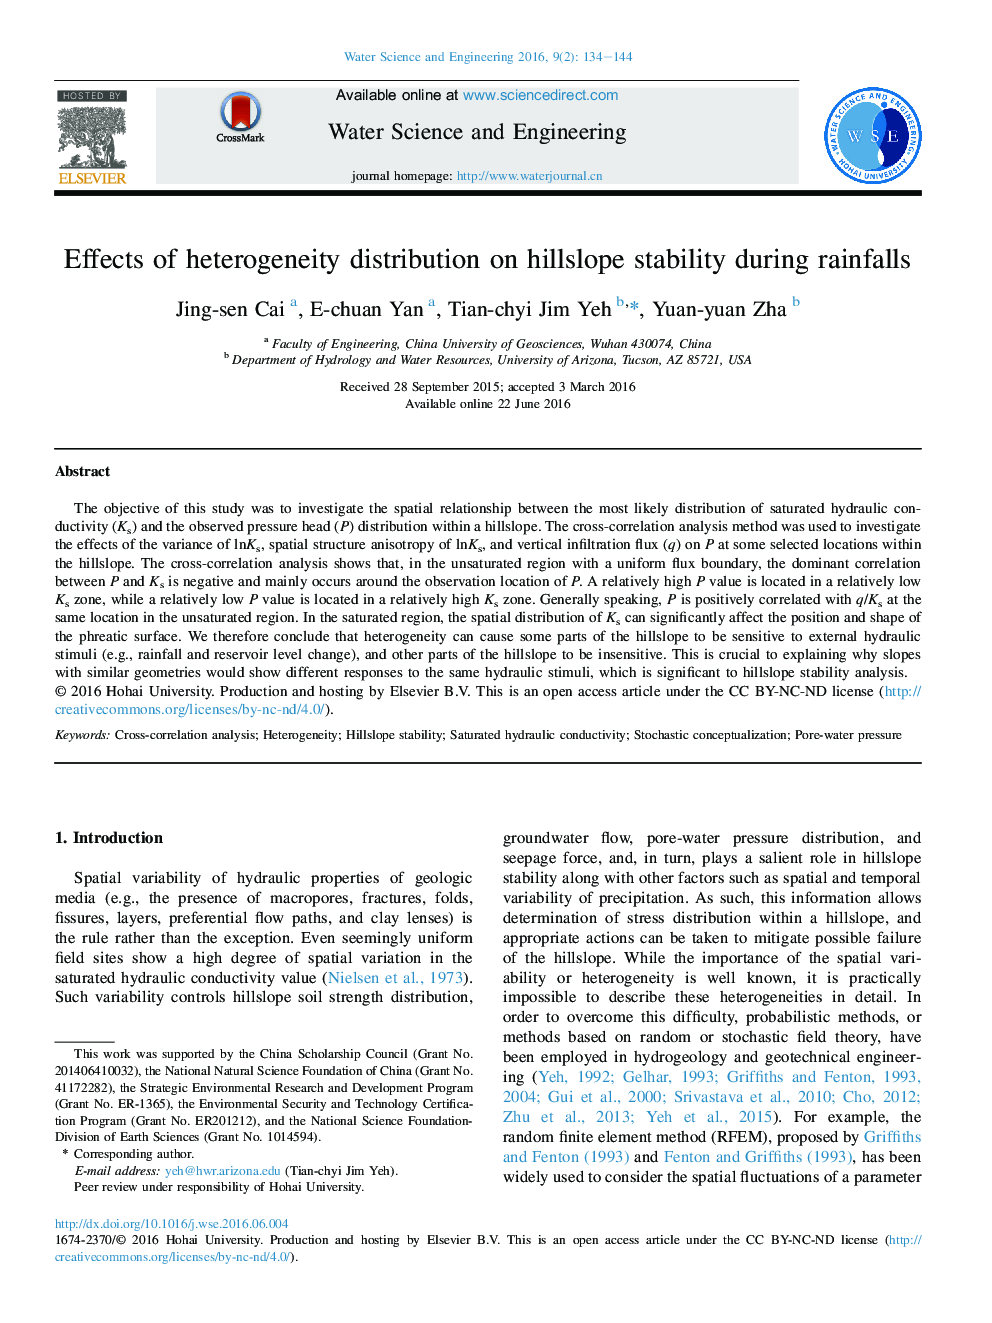 Effects of heterogeneity distribution on hillslope stability during rainfalls 